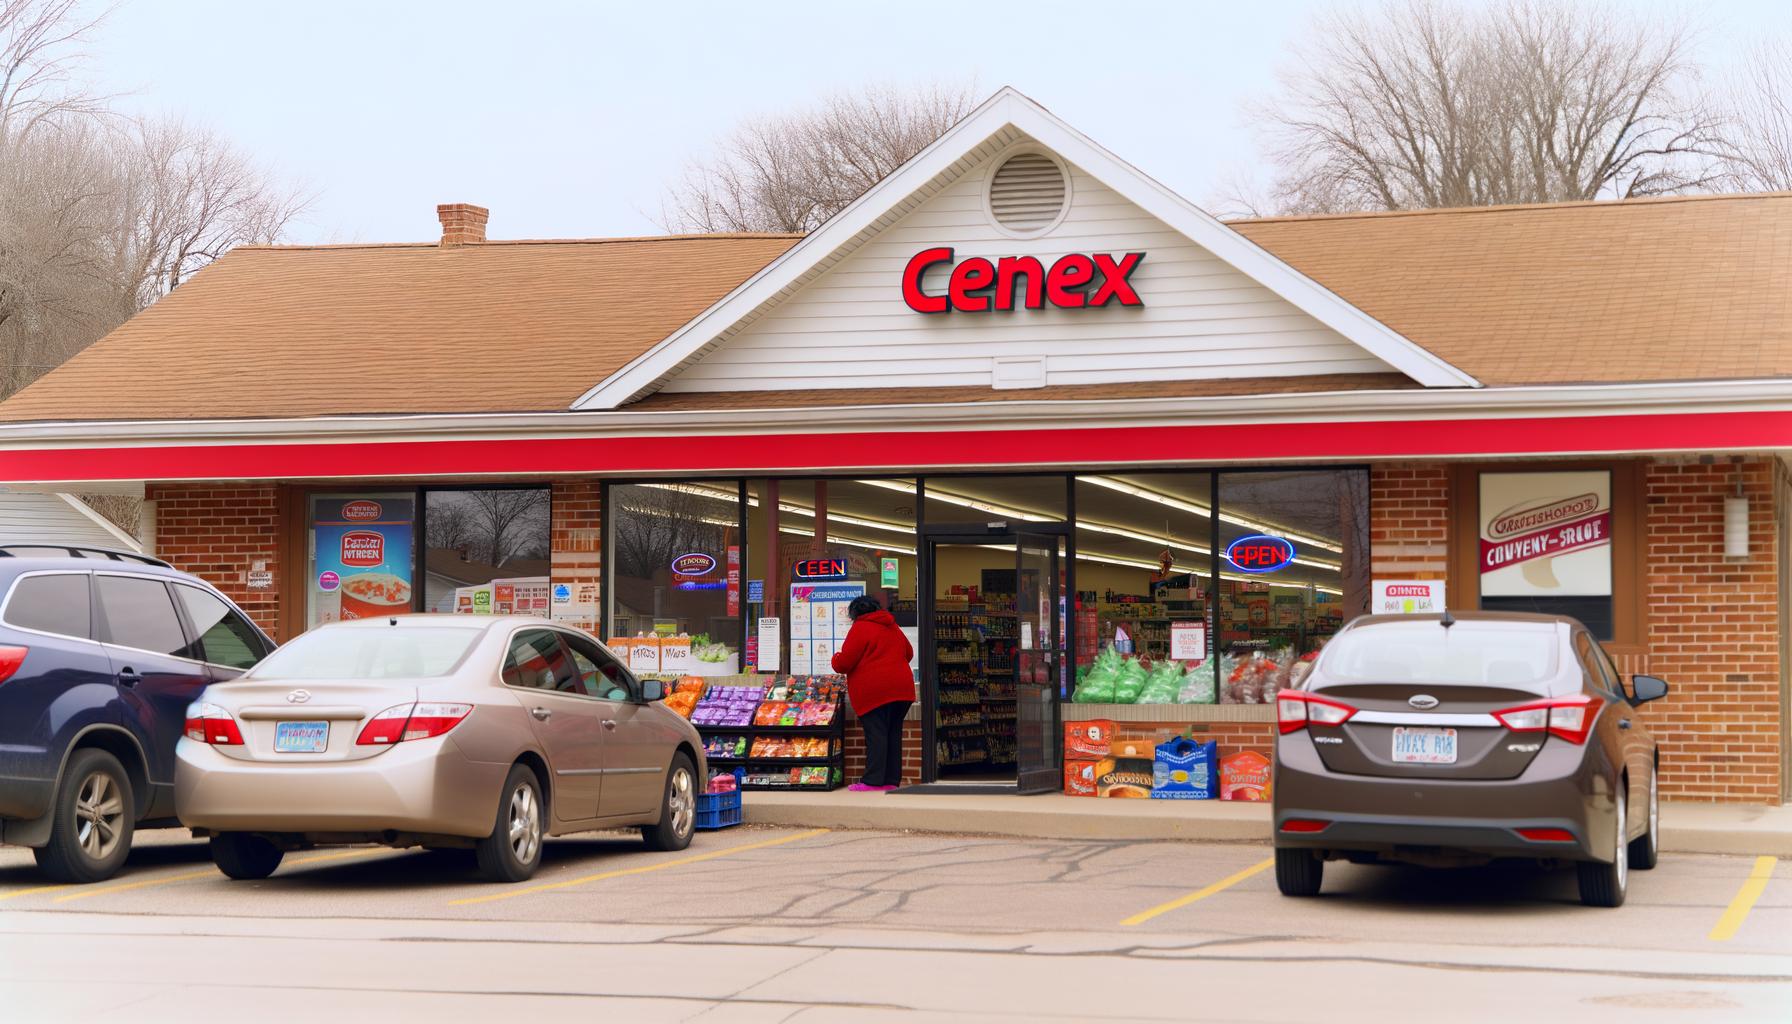 Cenex convenience store in Wisconsin